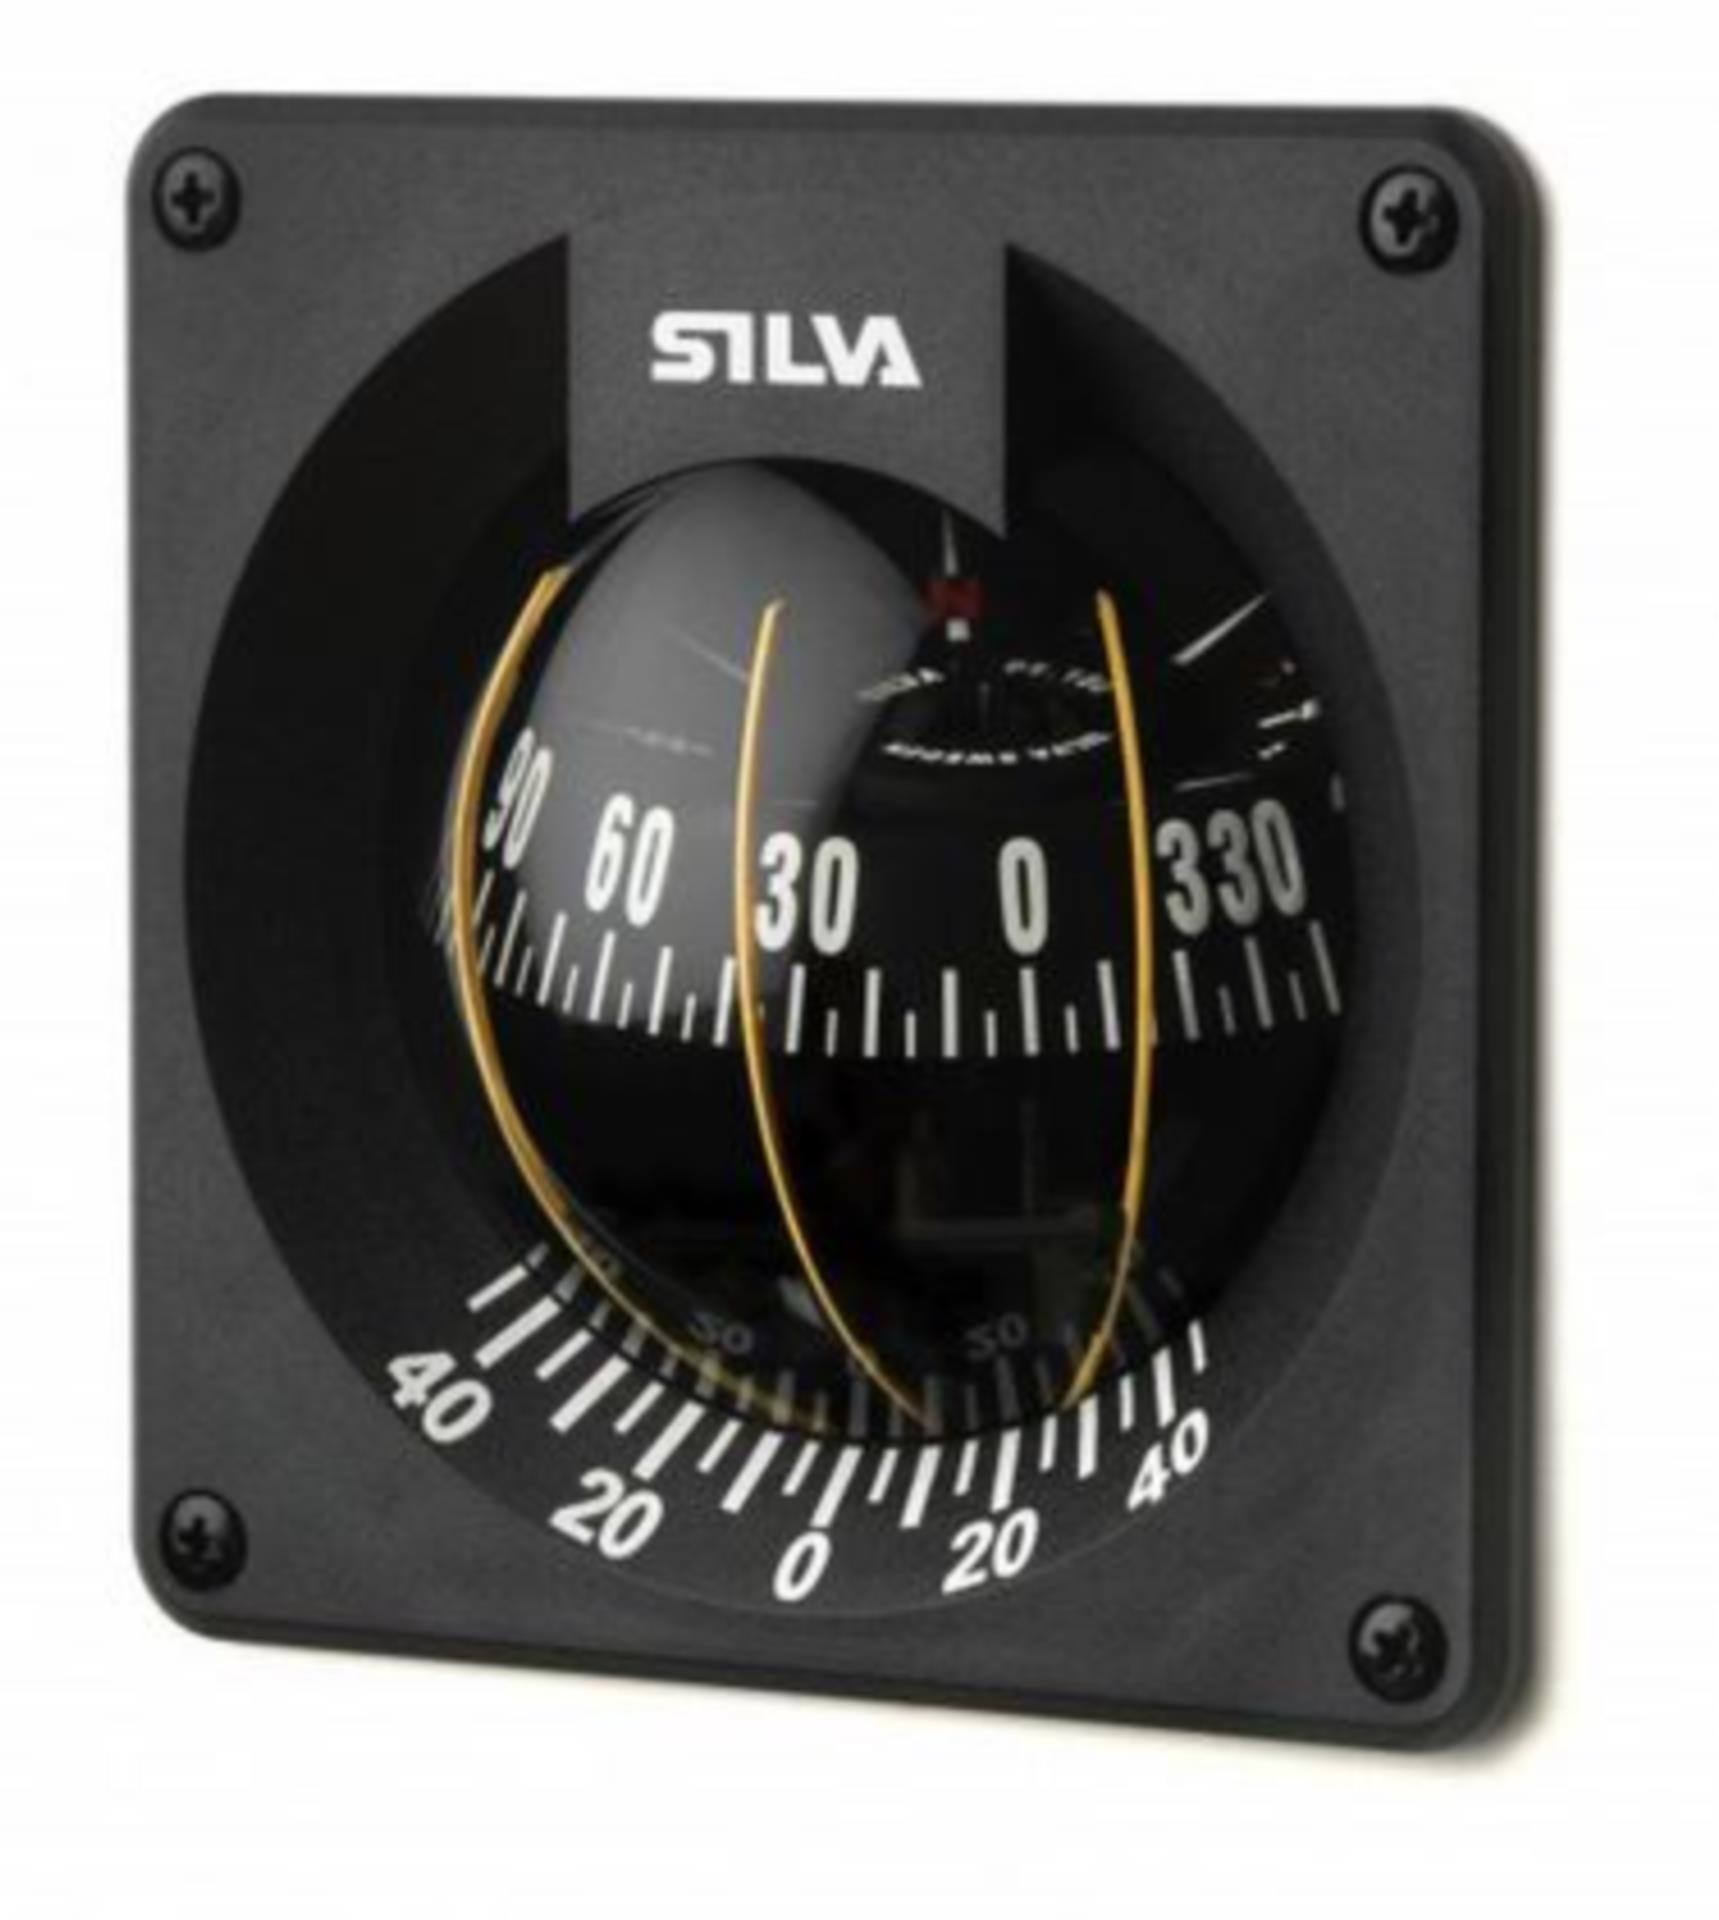 Silva 100B/H Baltic Kompass